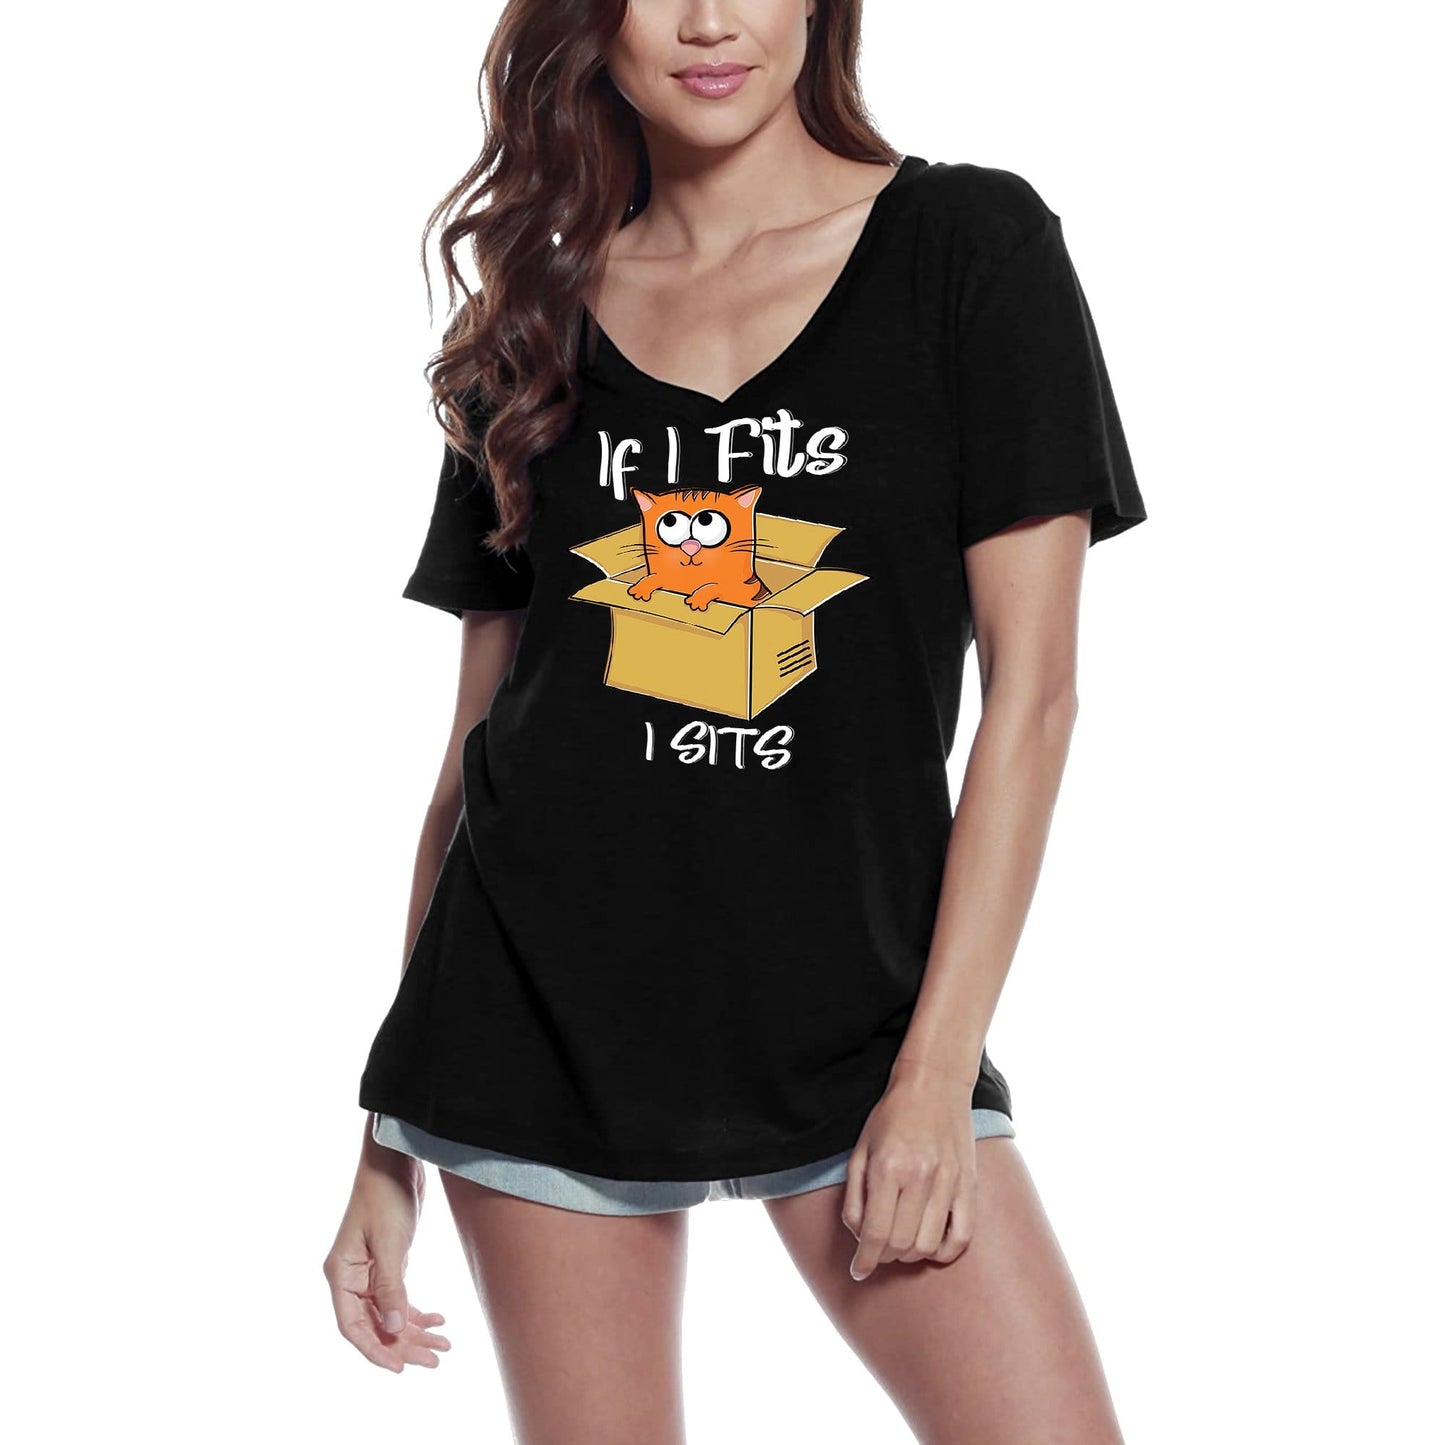 ULTRABASIC Women's T-Shirt If I Fits I Sits - Cute Short Sleeve Tee Shirt